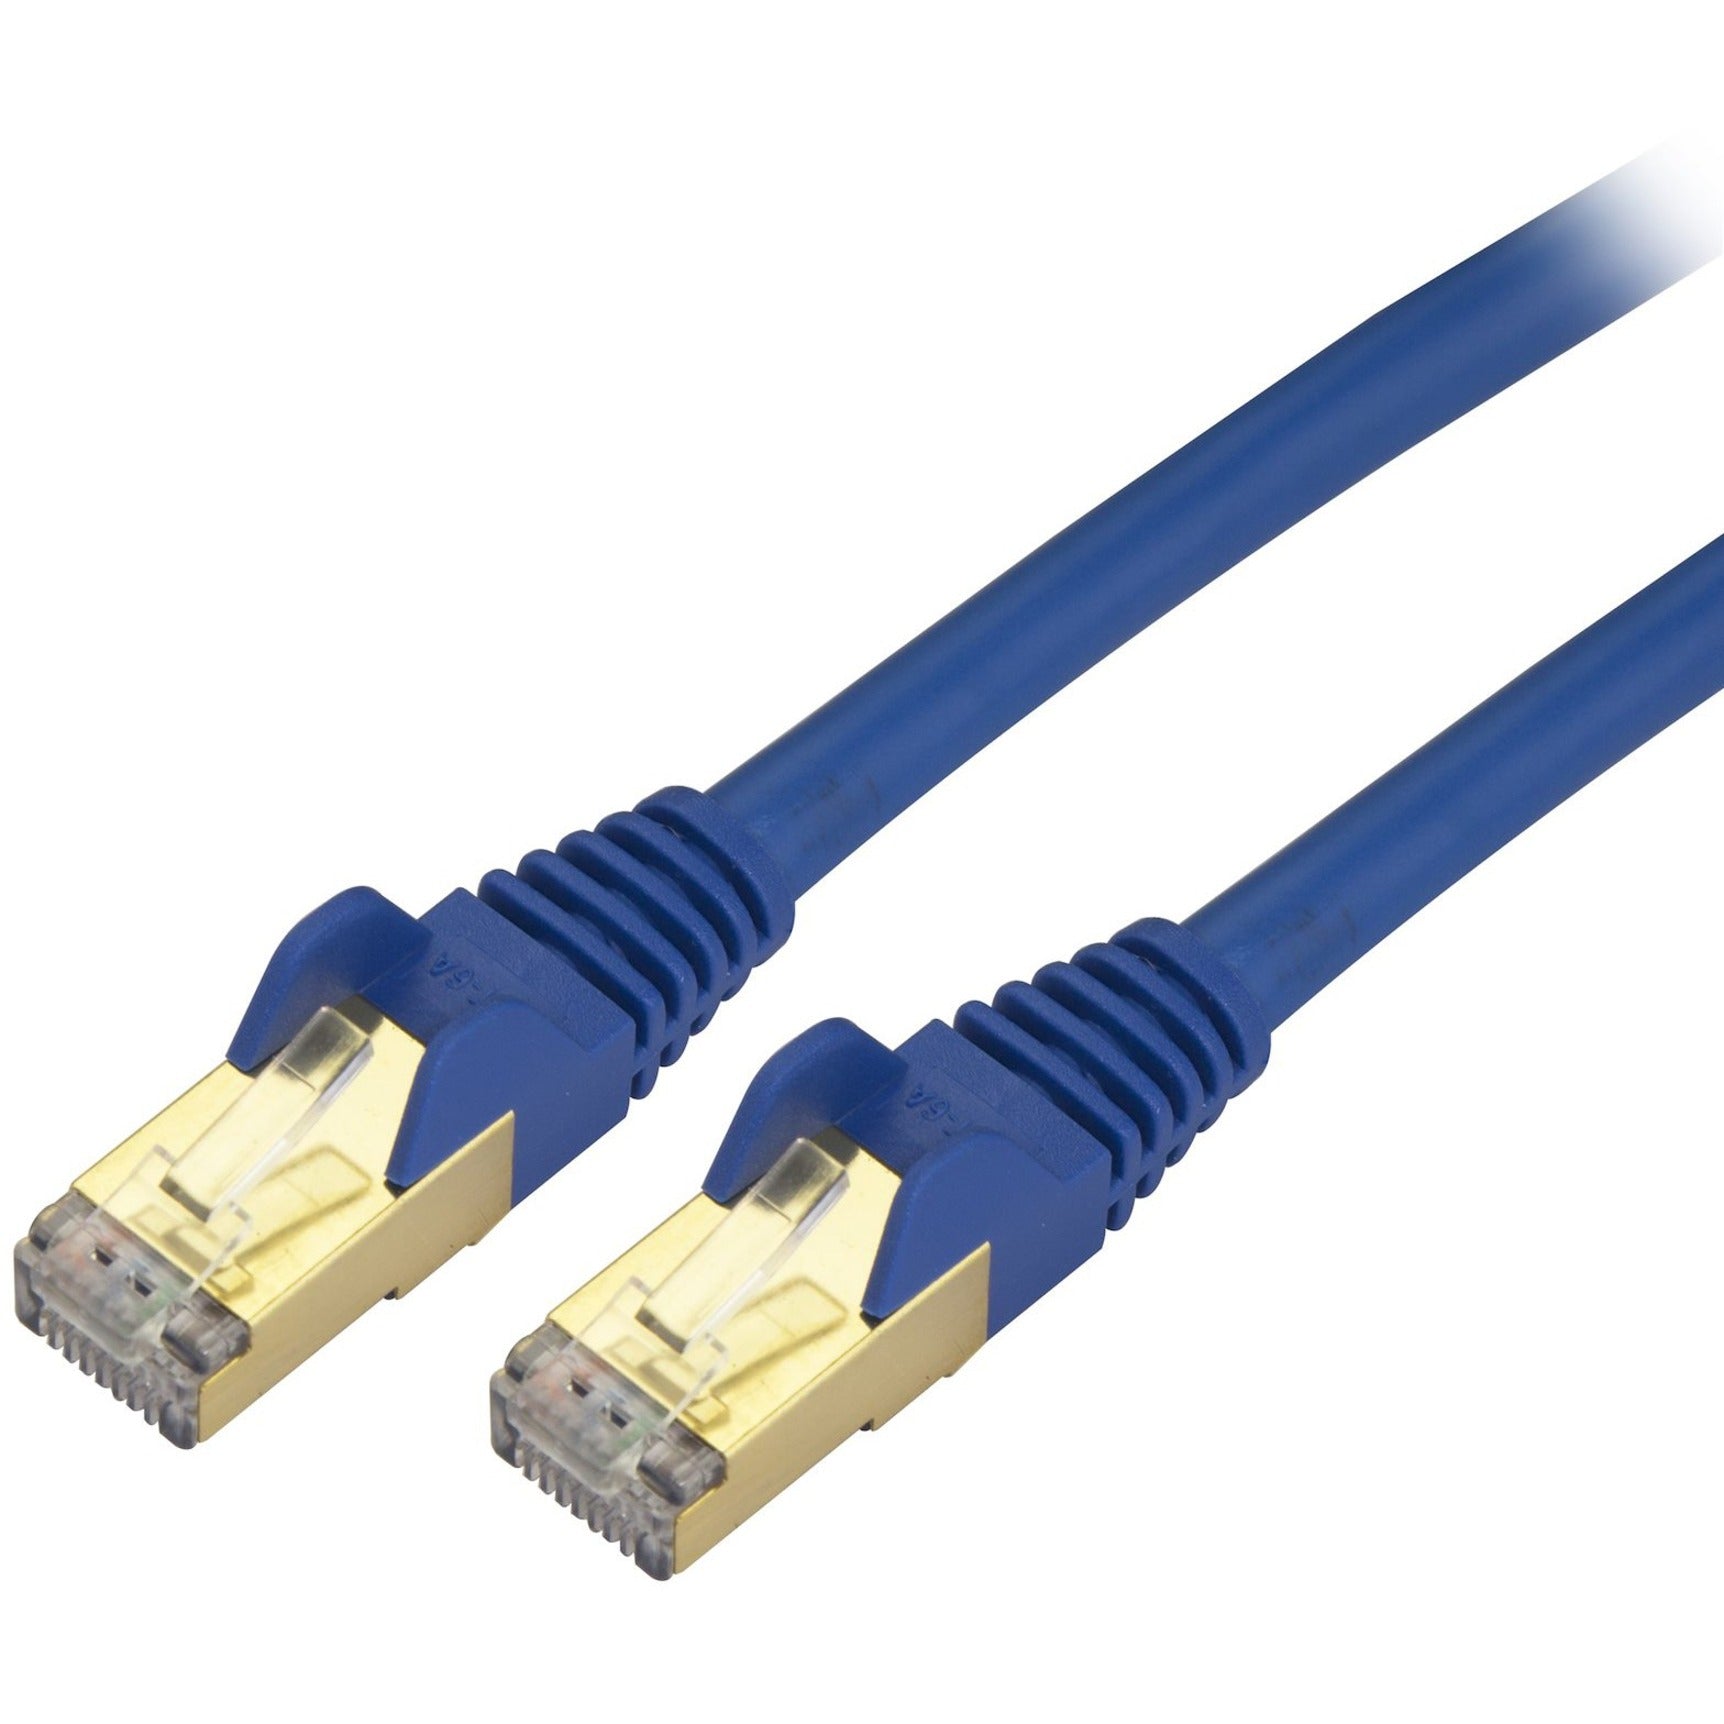 Marca: StarTech.com Cable de parche moldeado apantallado Cat6a azul de 10 pies RJ45 STP de 10 Gigabit protección EMI/RF.